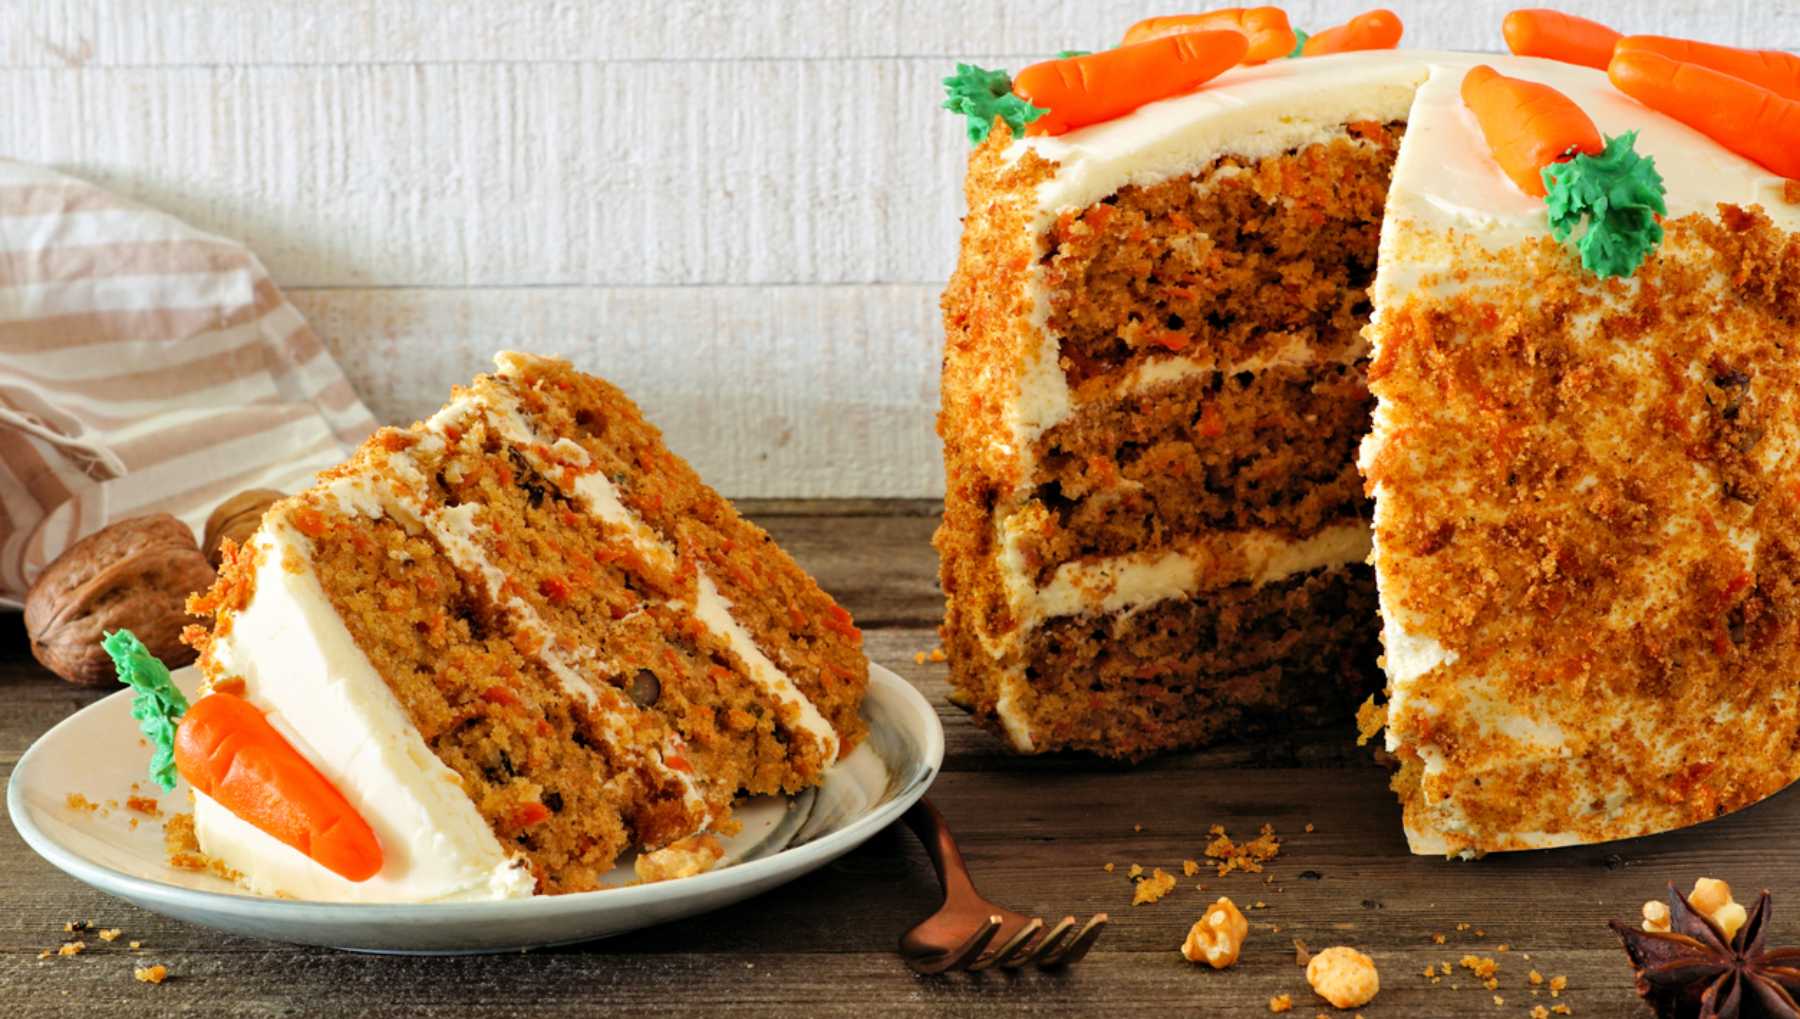 La mejor receta casera de carrot cake o tarta de zanahoria